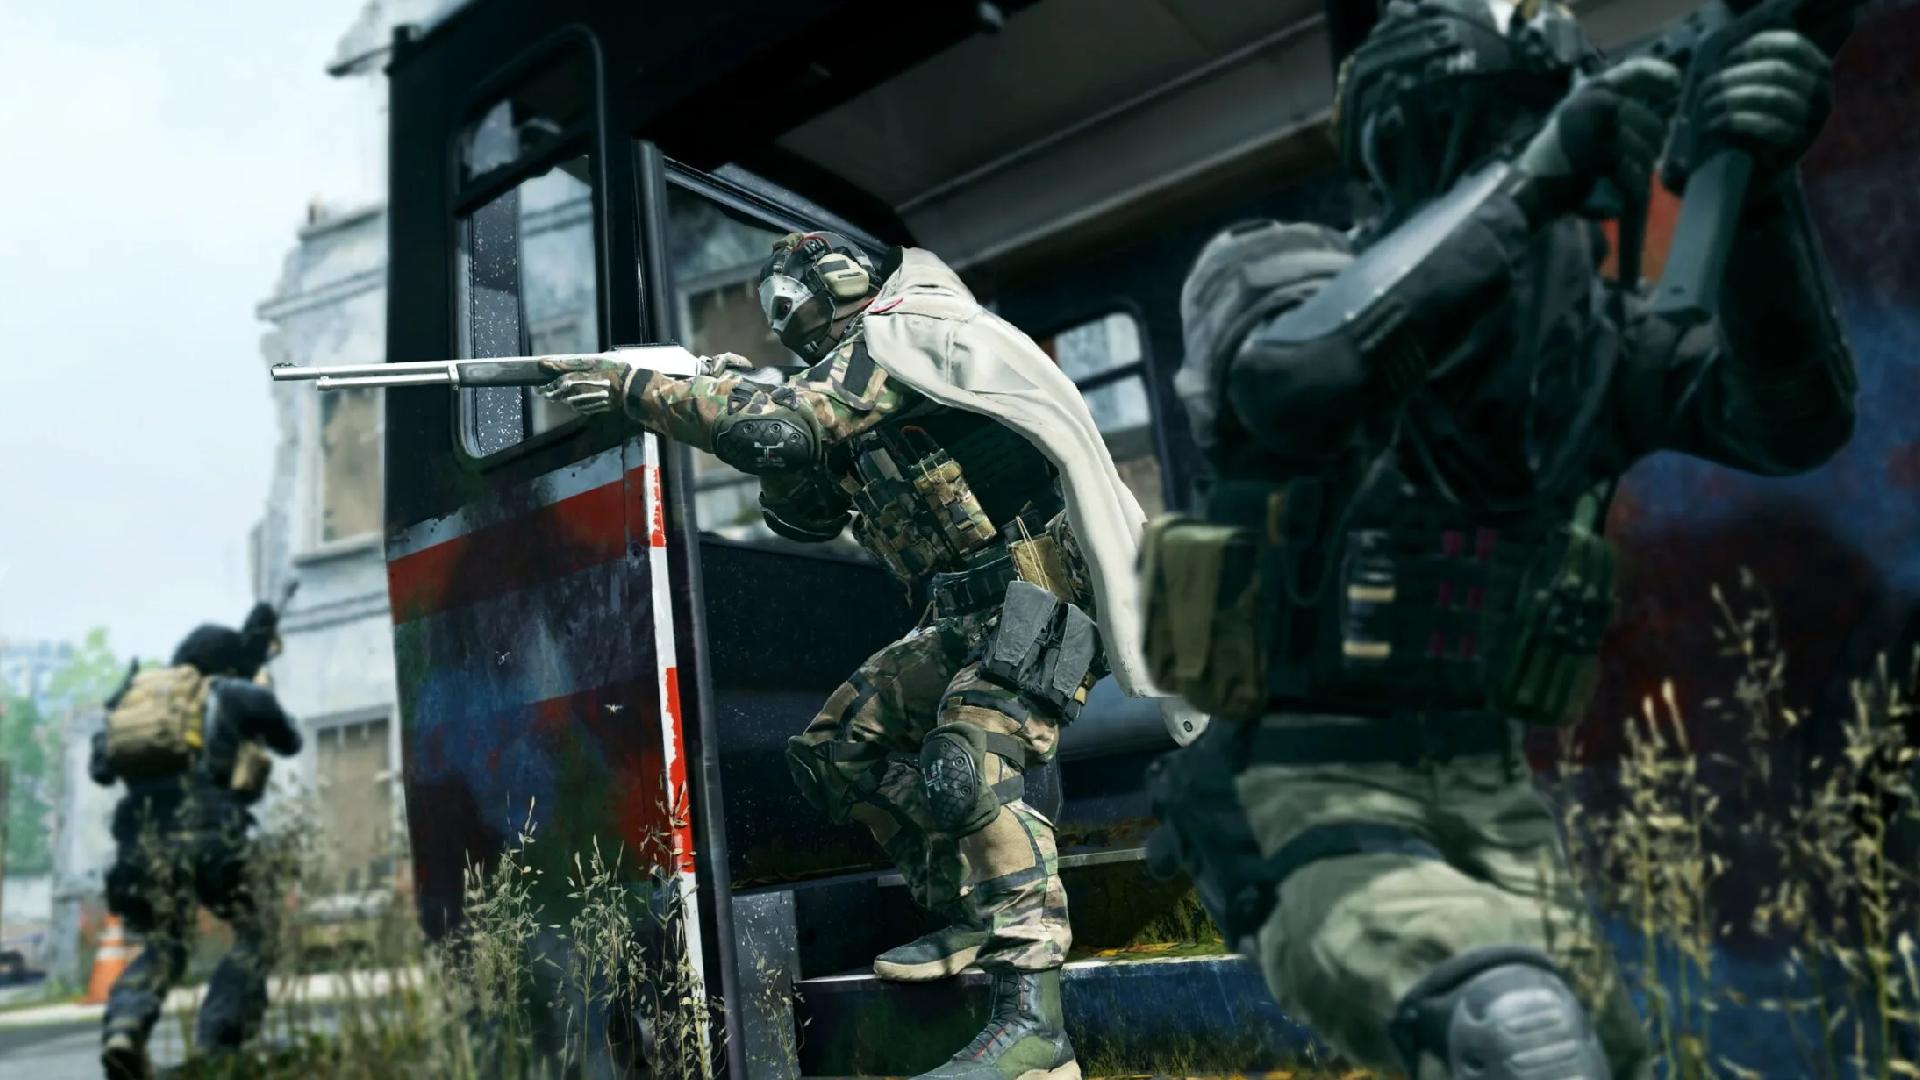 Call of Duty: Modern Warfare 2 -- Beta Killstreak Guide - GameSpot